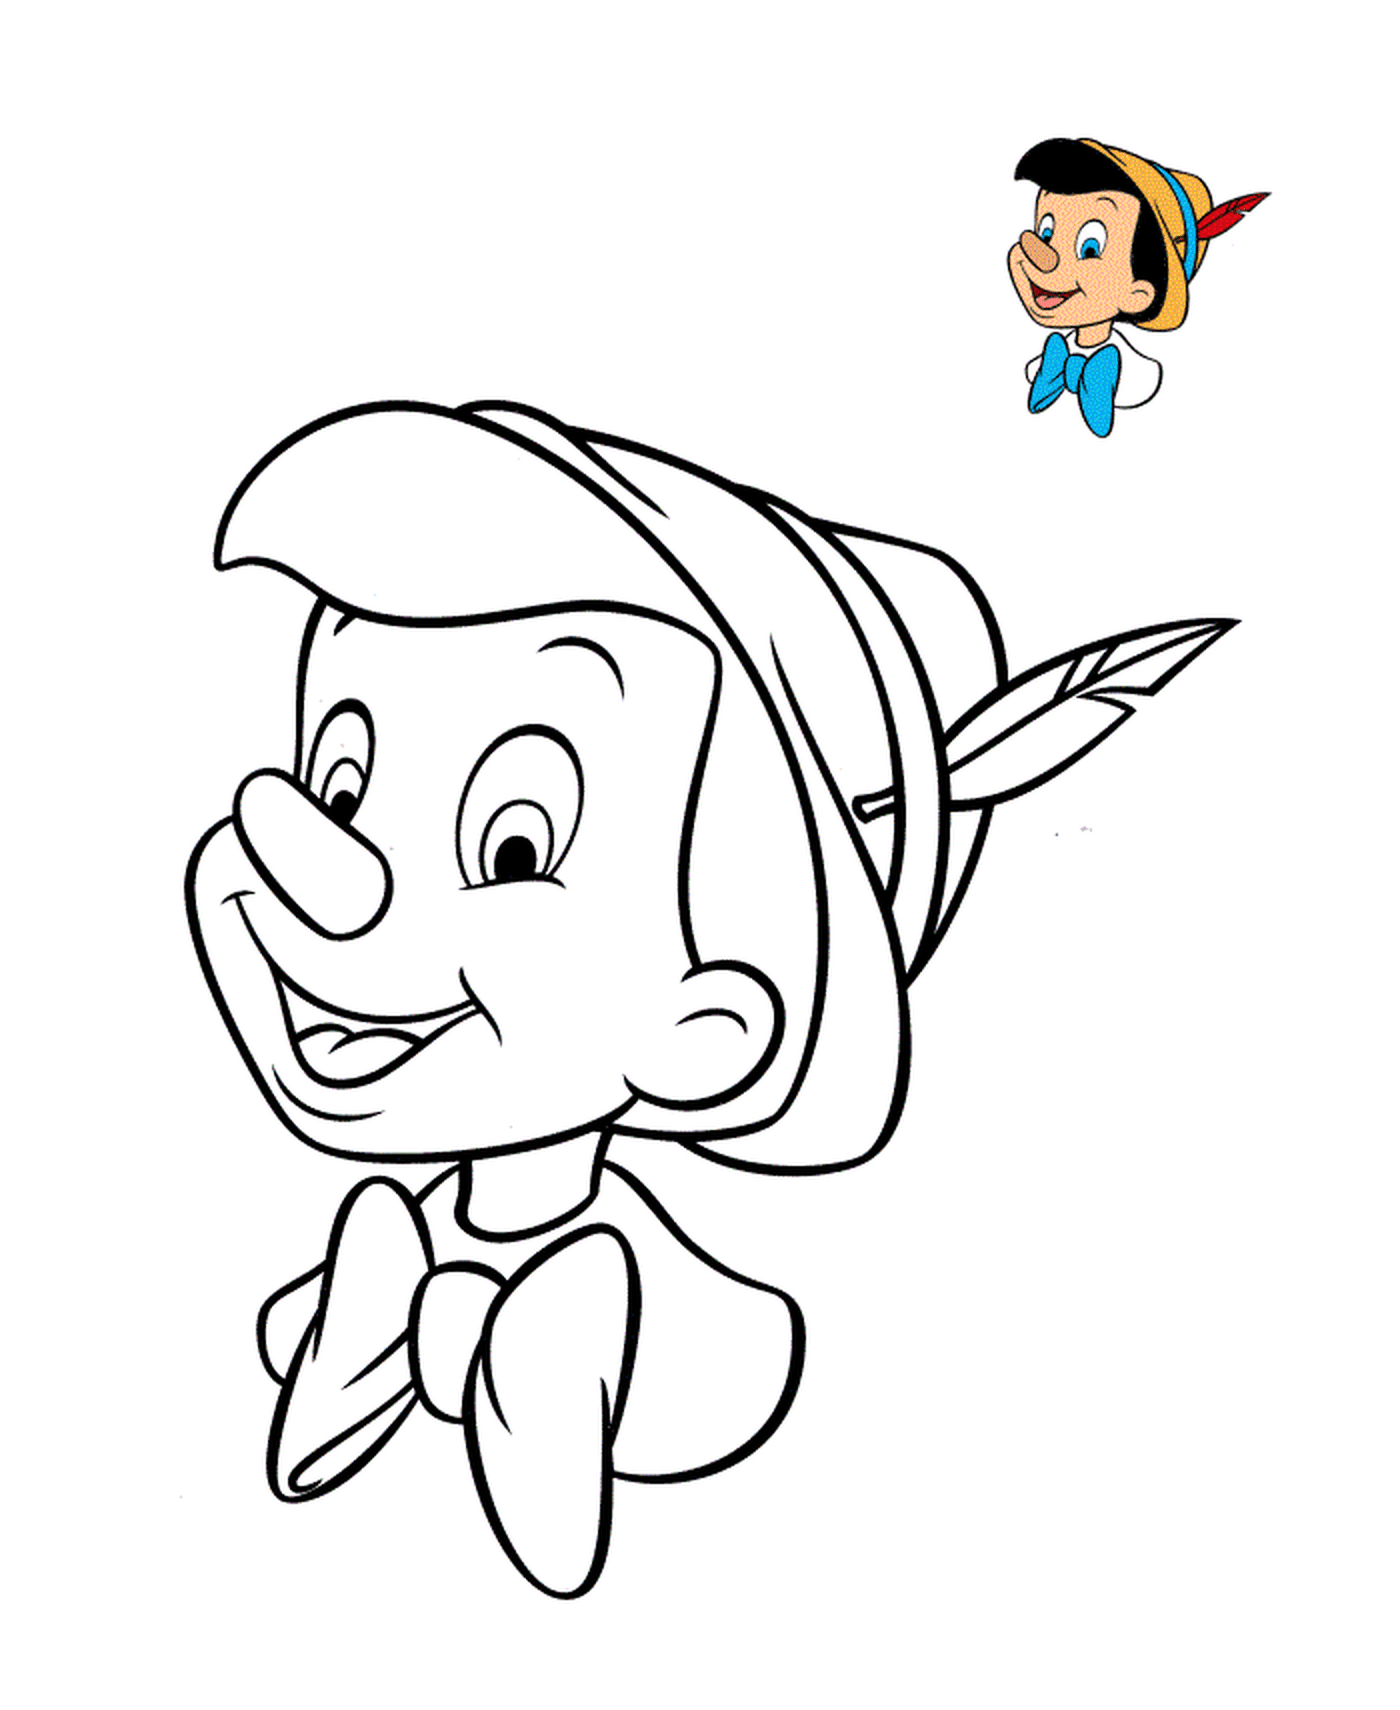  Pinocho, divertido personaje de Disney 